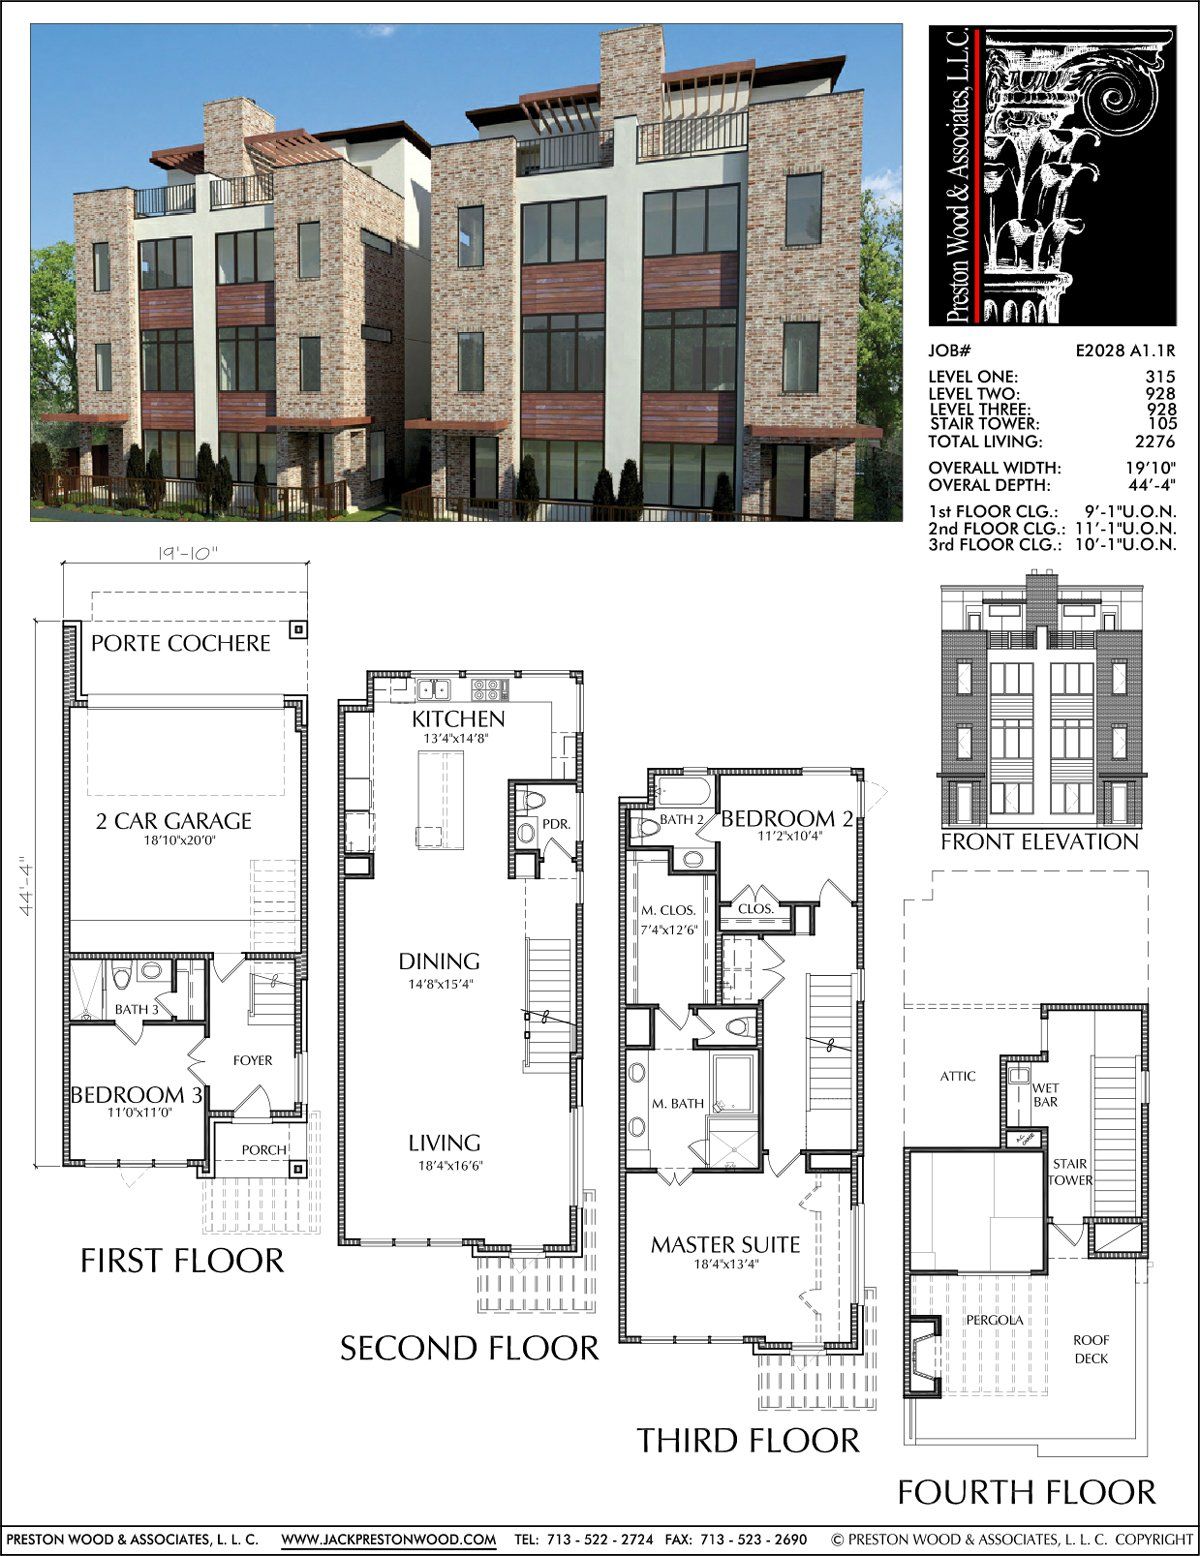 3 1/2 Story Duplex Townhouse Plan E2028 A1.1 Town house